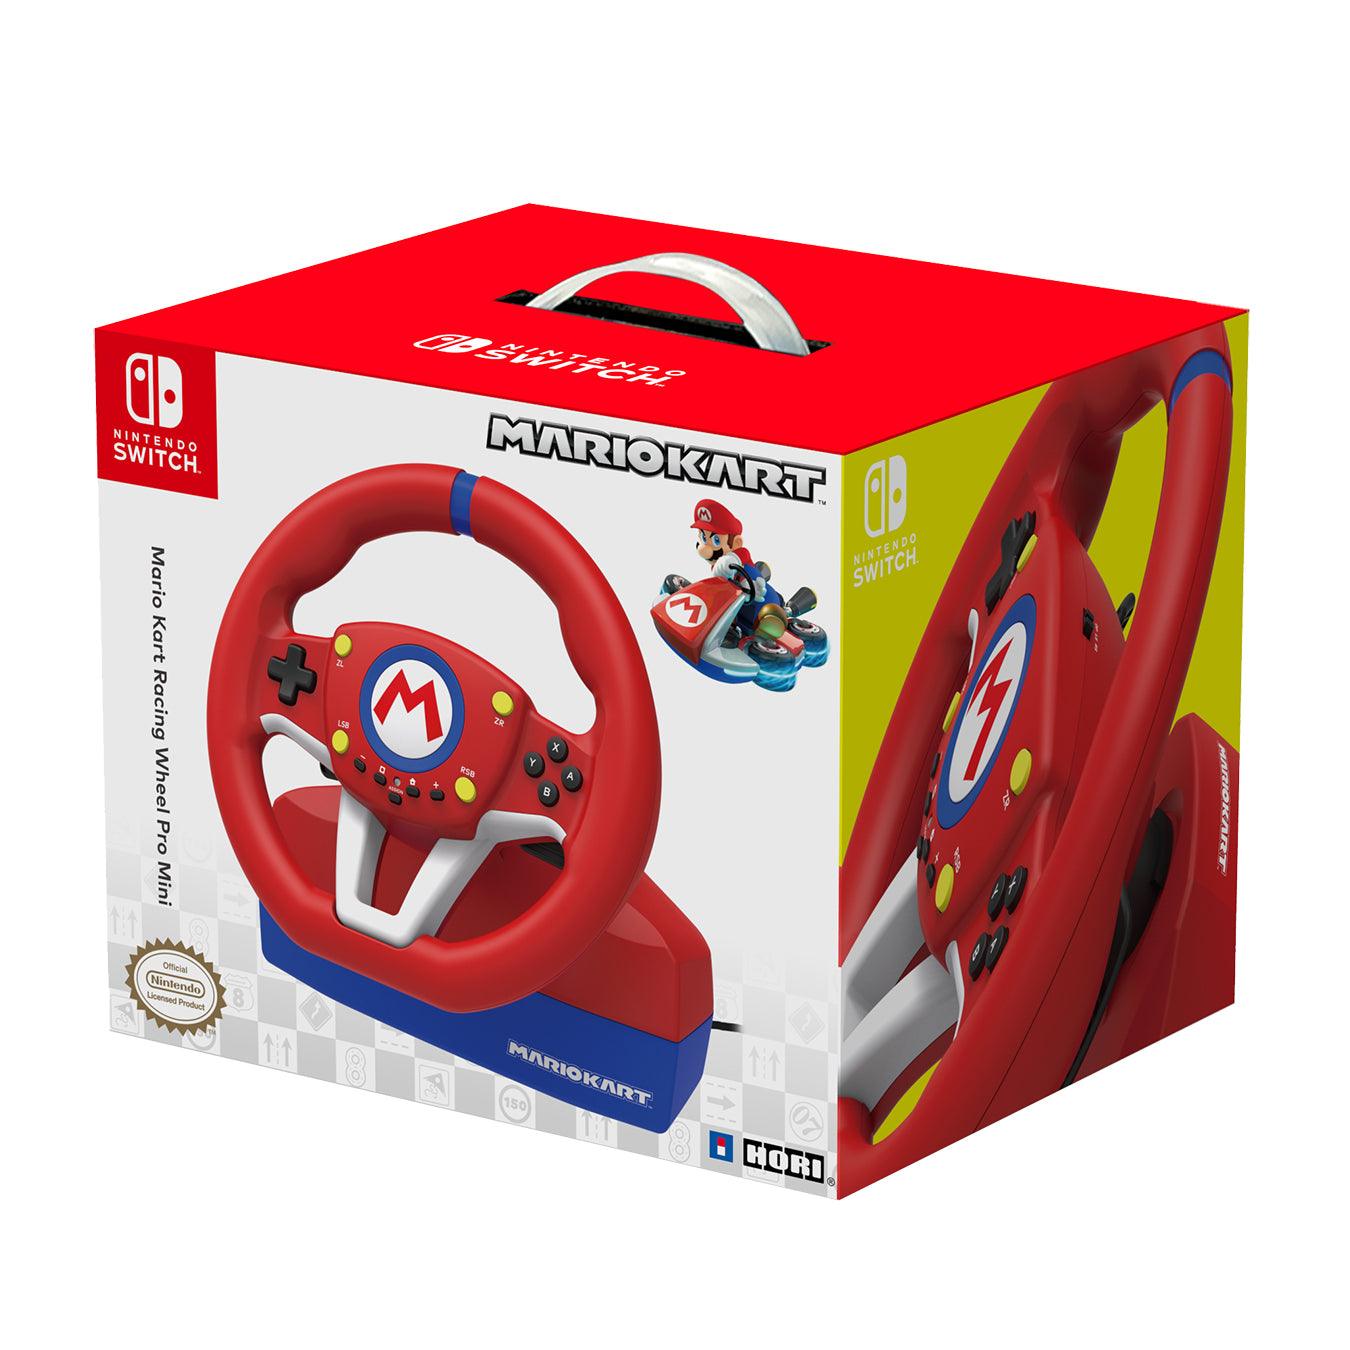 Pro Mario Kart Wheel - Want a New Gadget